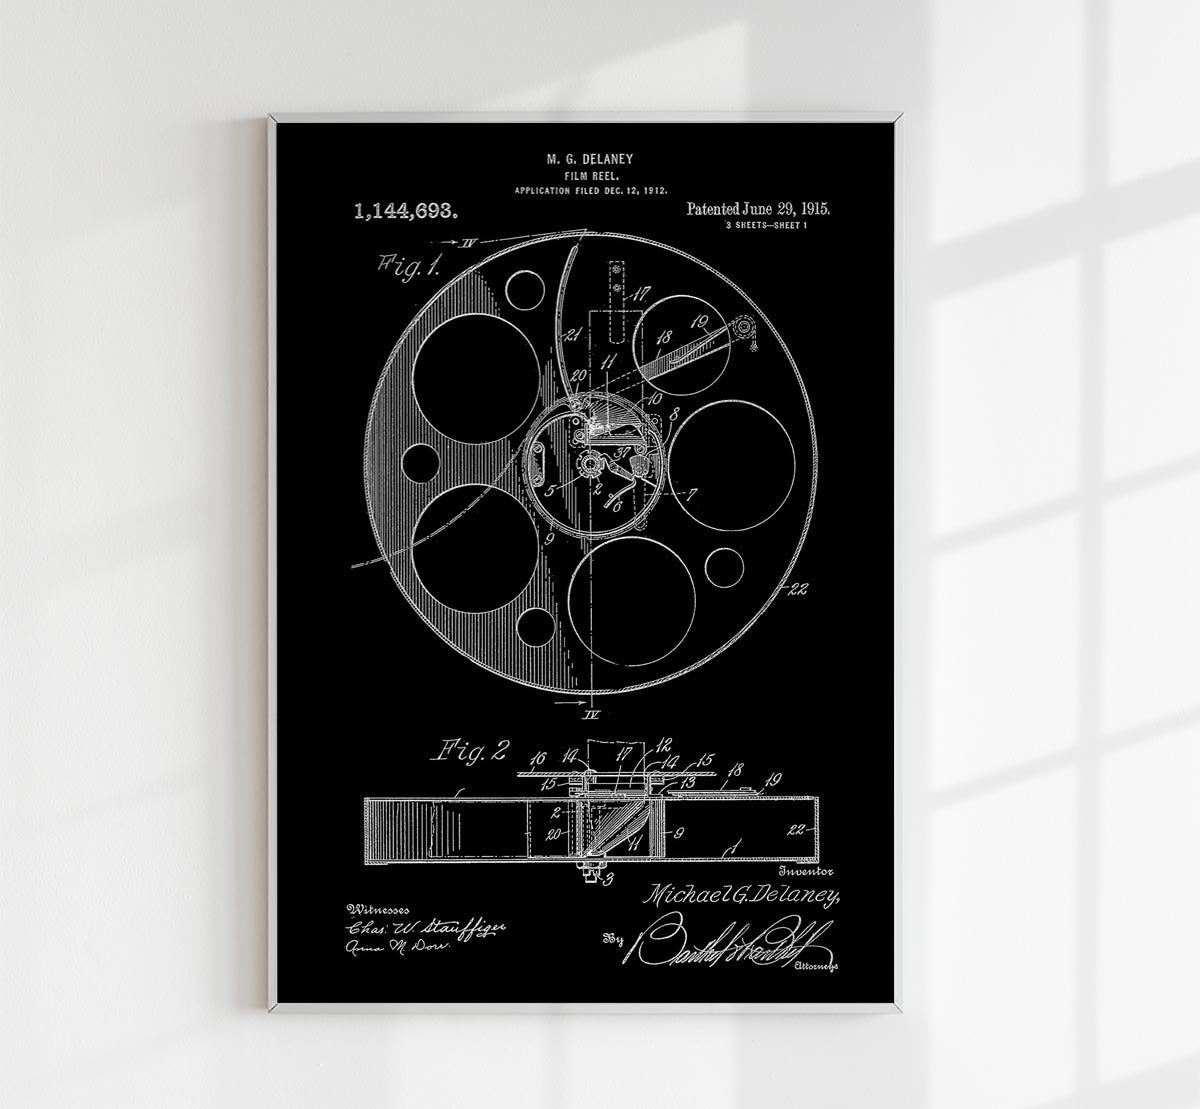 Film Reel Patent Poster